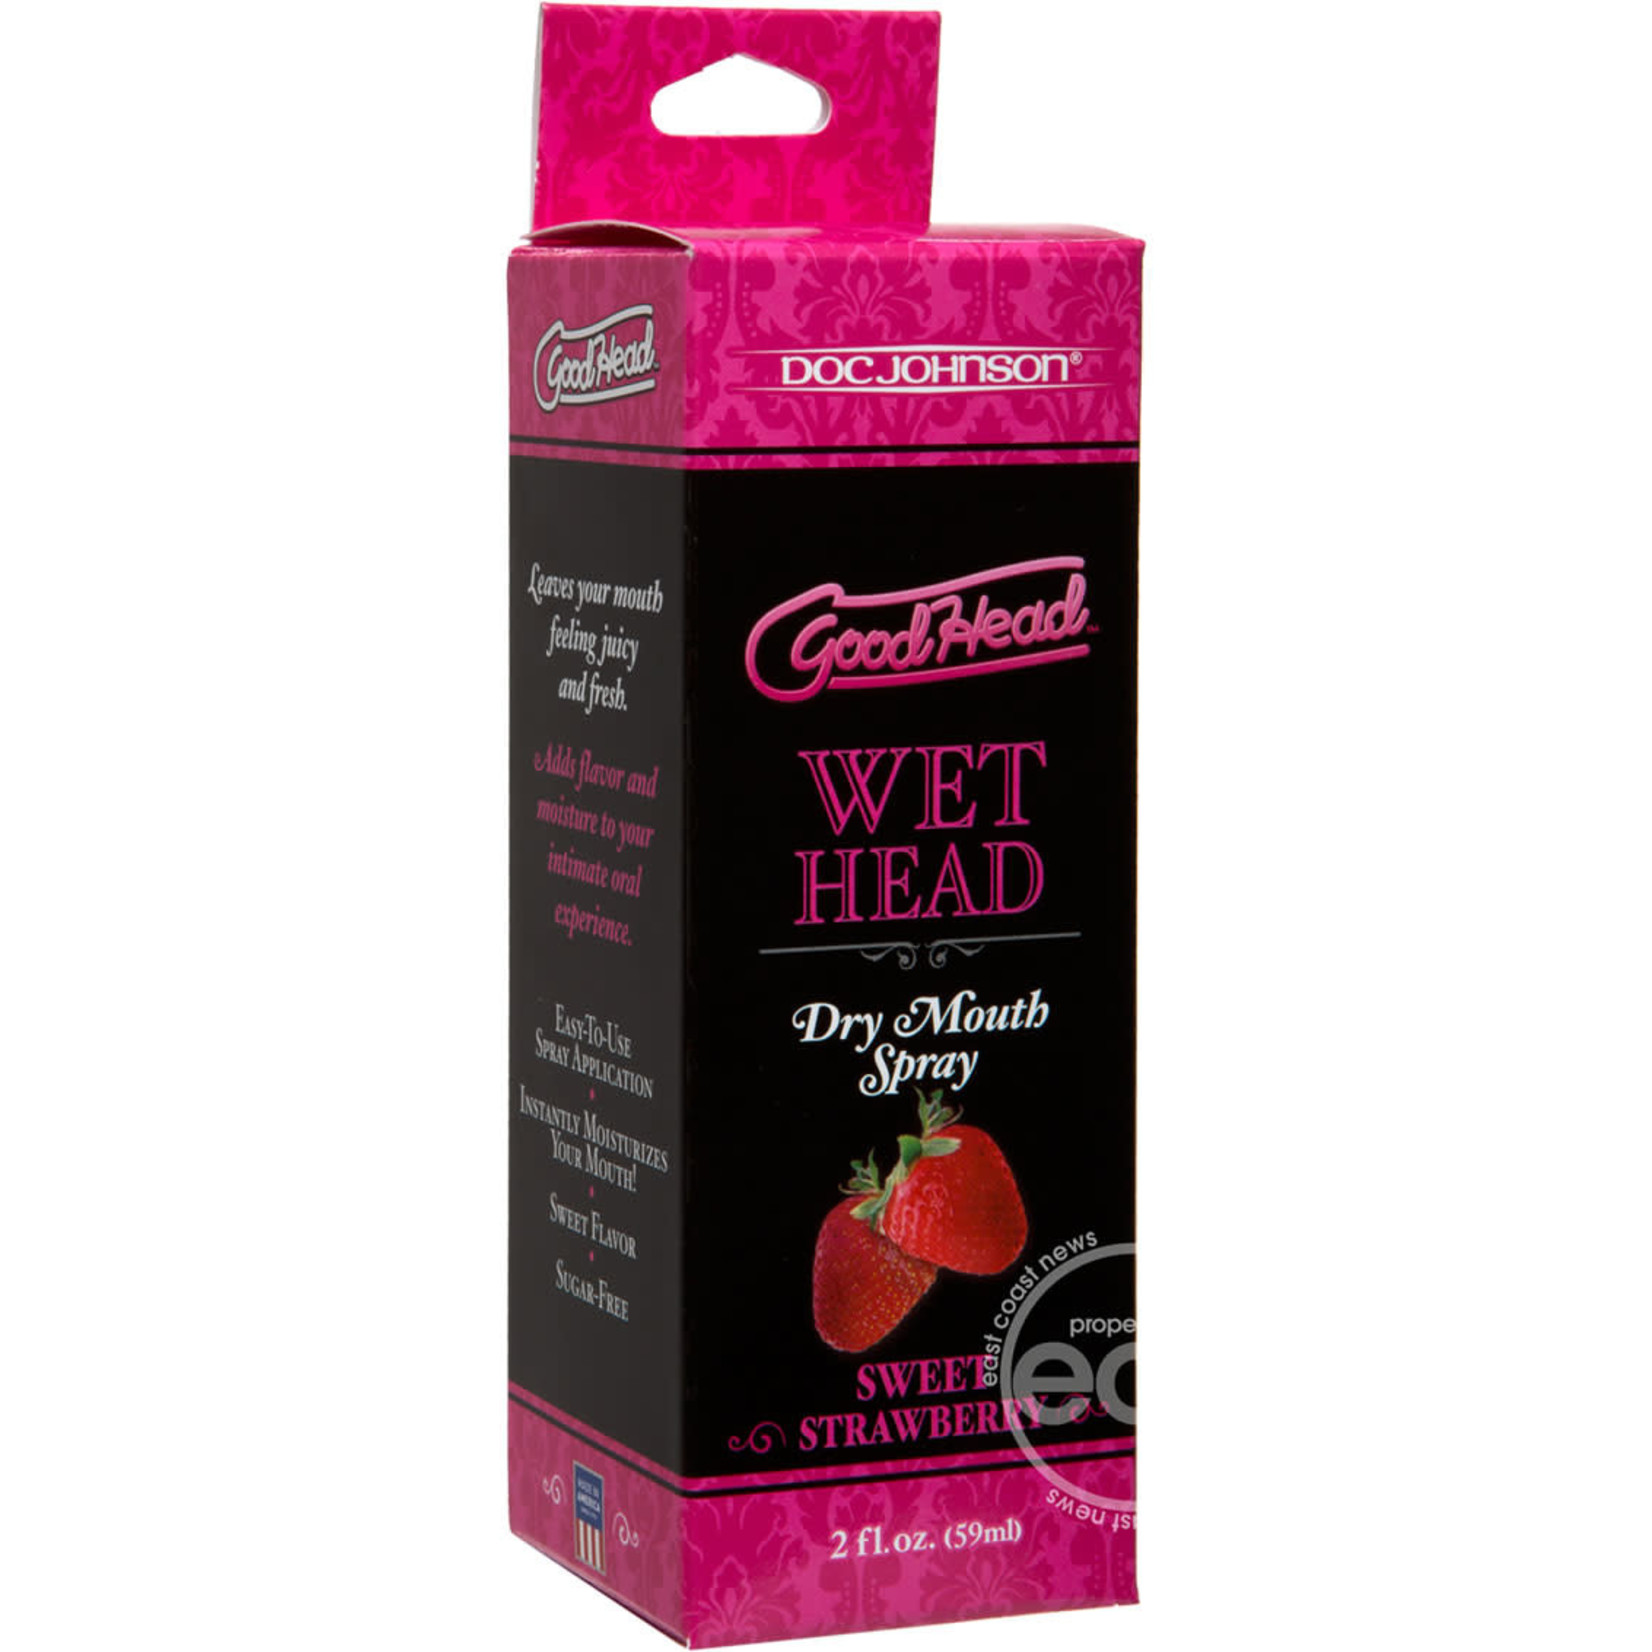 Goodhead Wet Head Dry Mouth Spray Sweet Strawberry 2oz